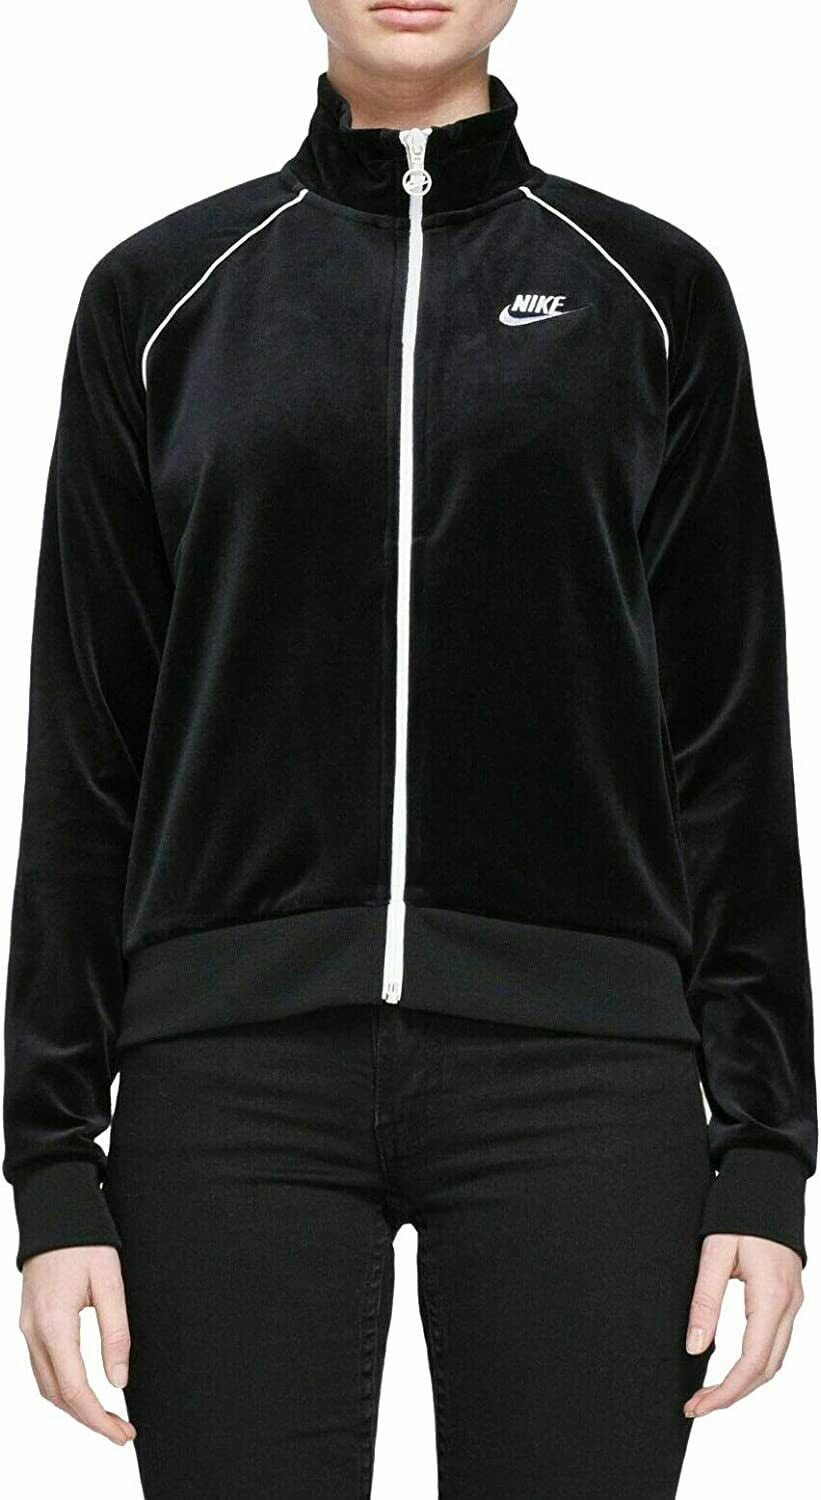 Nike - Nike Women's Sportswear Velour Track Jacket Black/White Full Zip